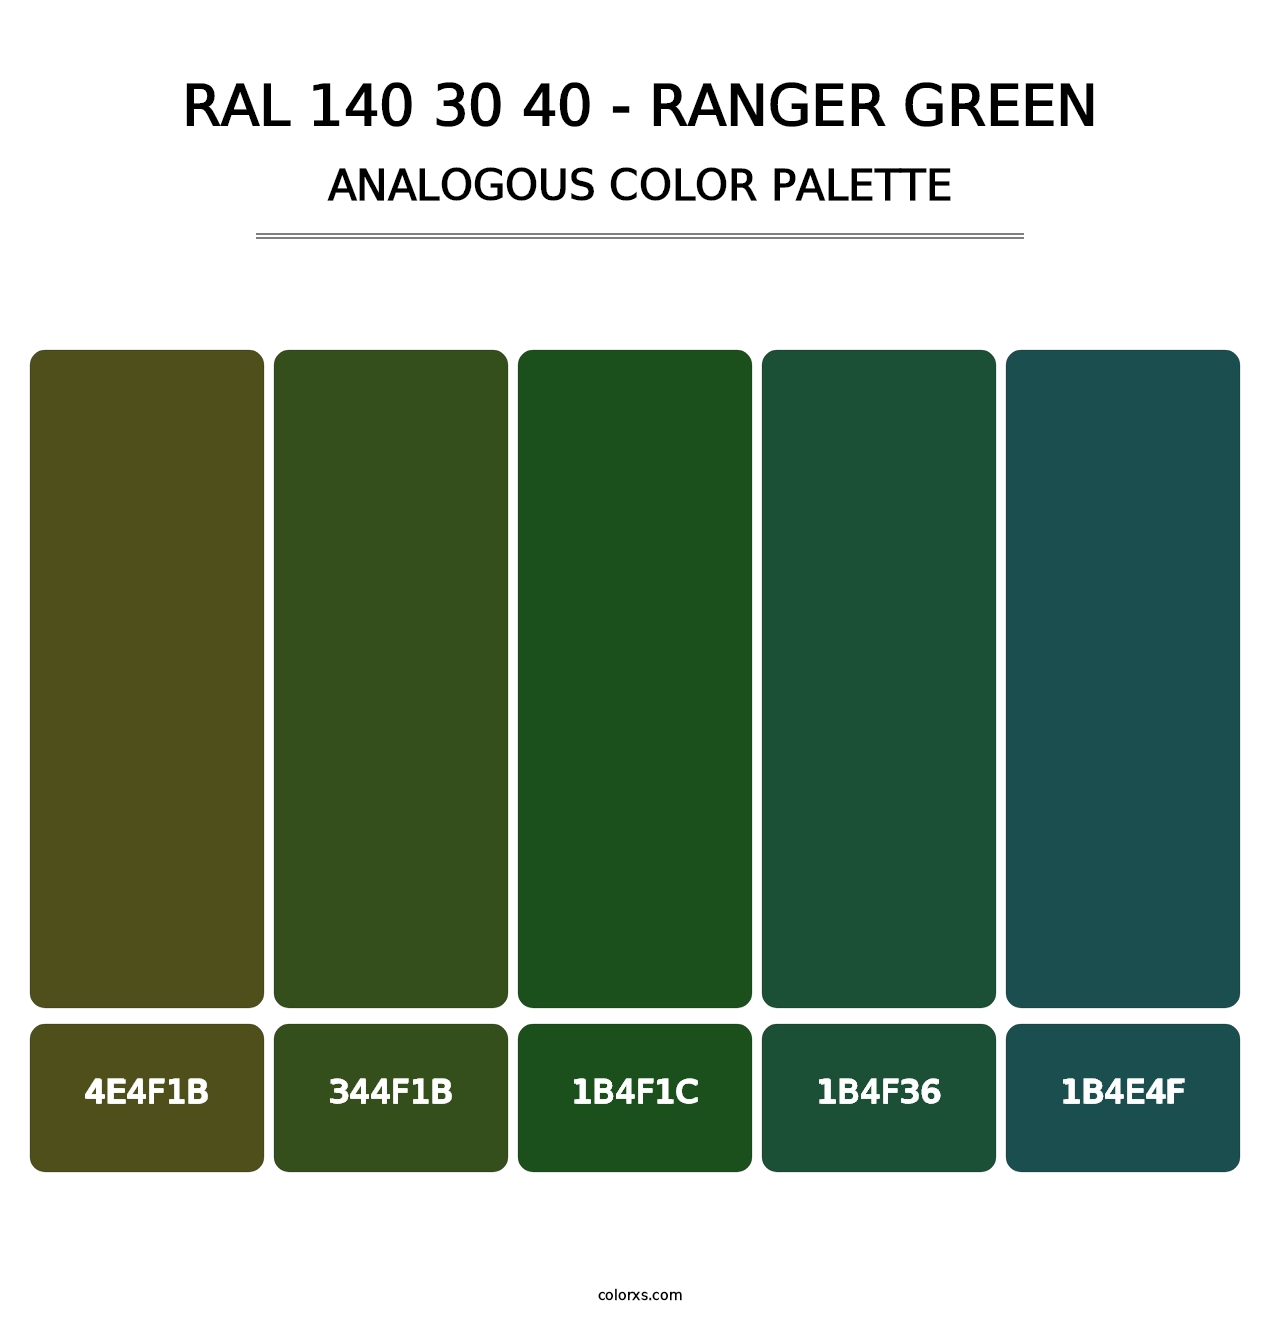 RAL 140 30 40 - Ranger Green - Analogous Color Palette